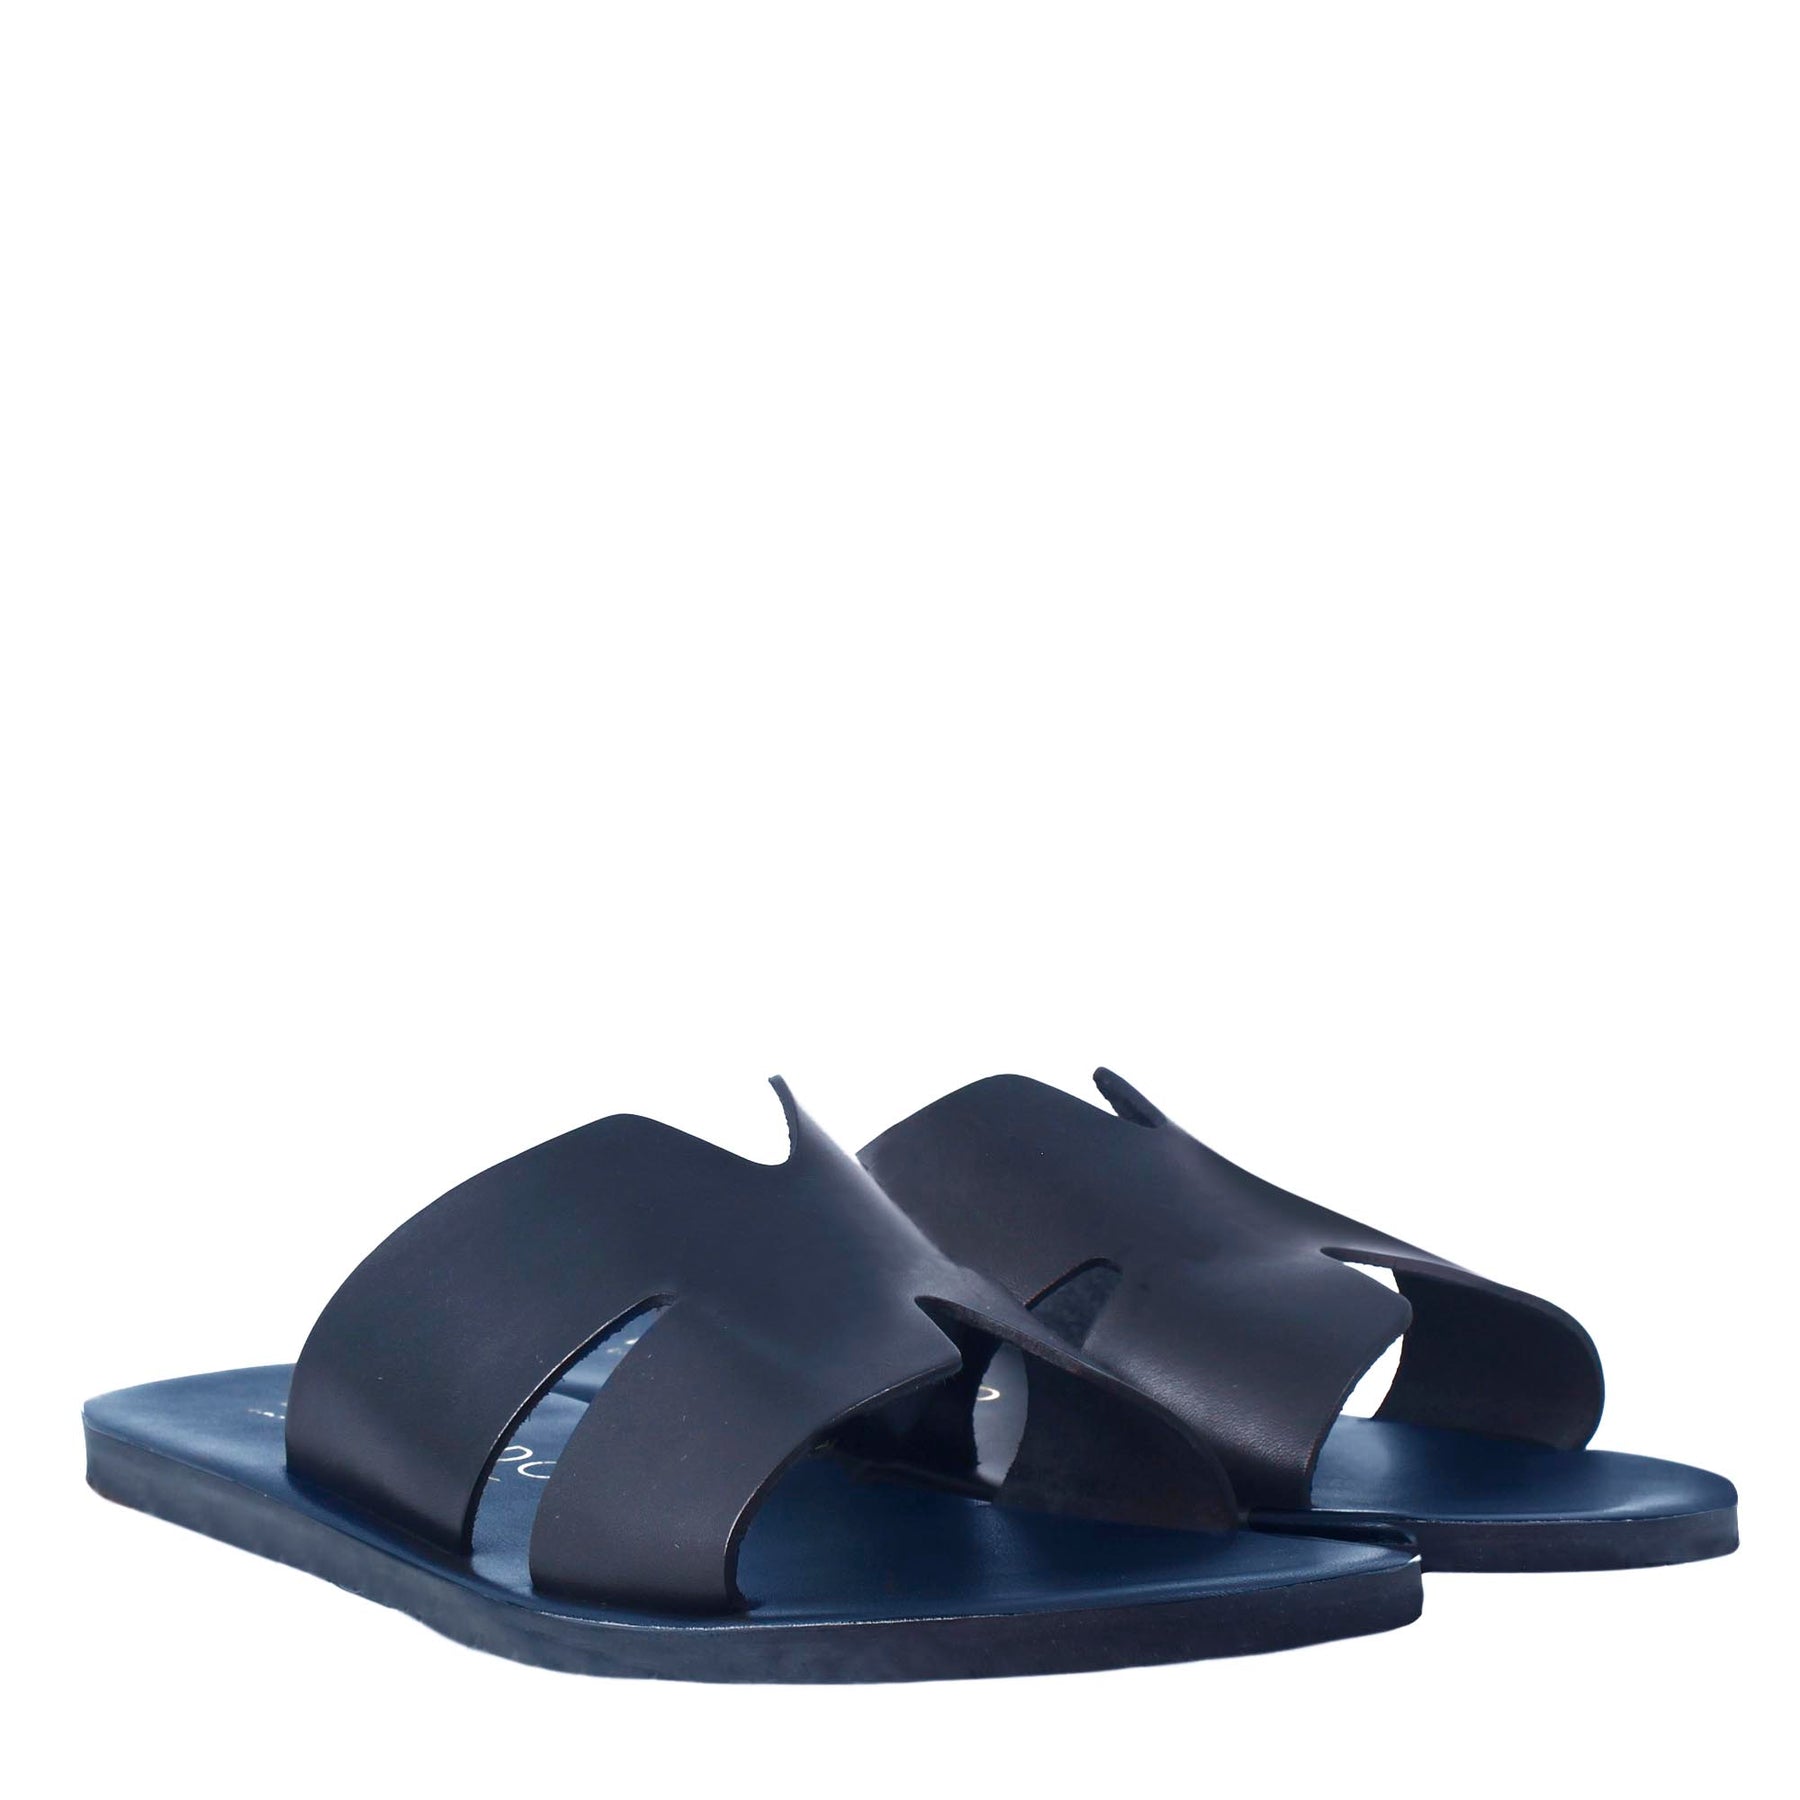 Herren-Sandalen in H-Form aus blauem Leder